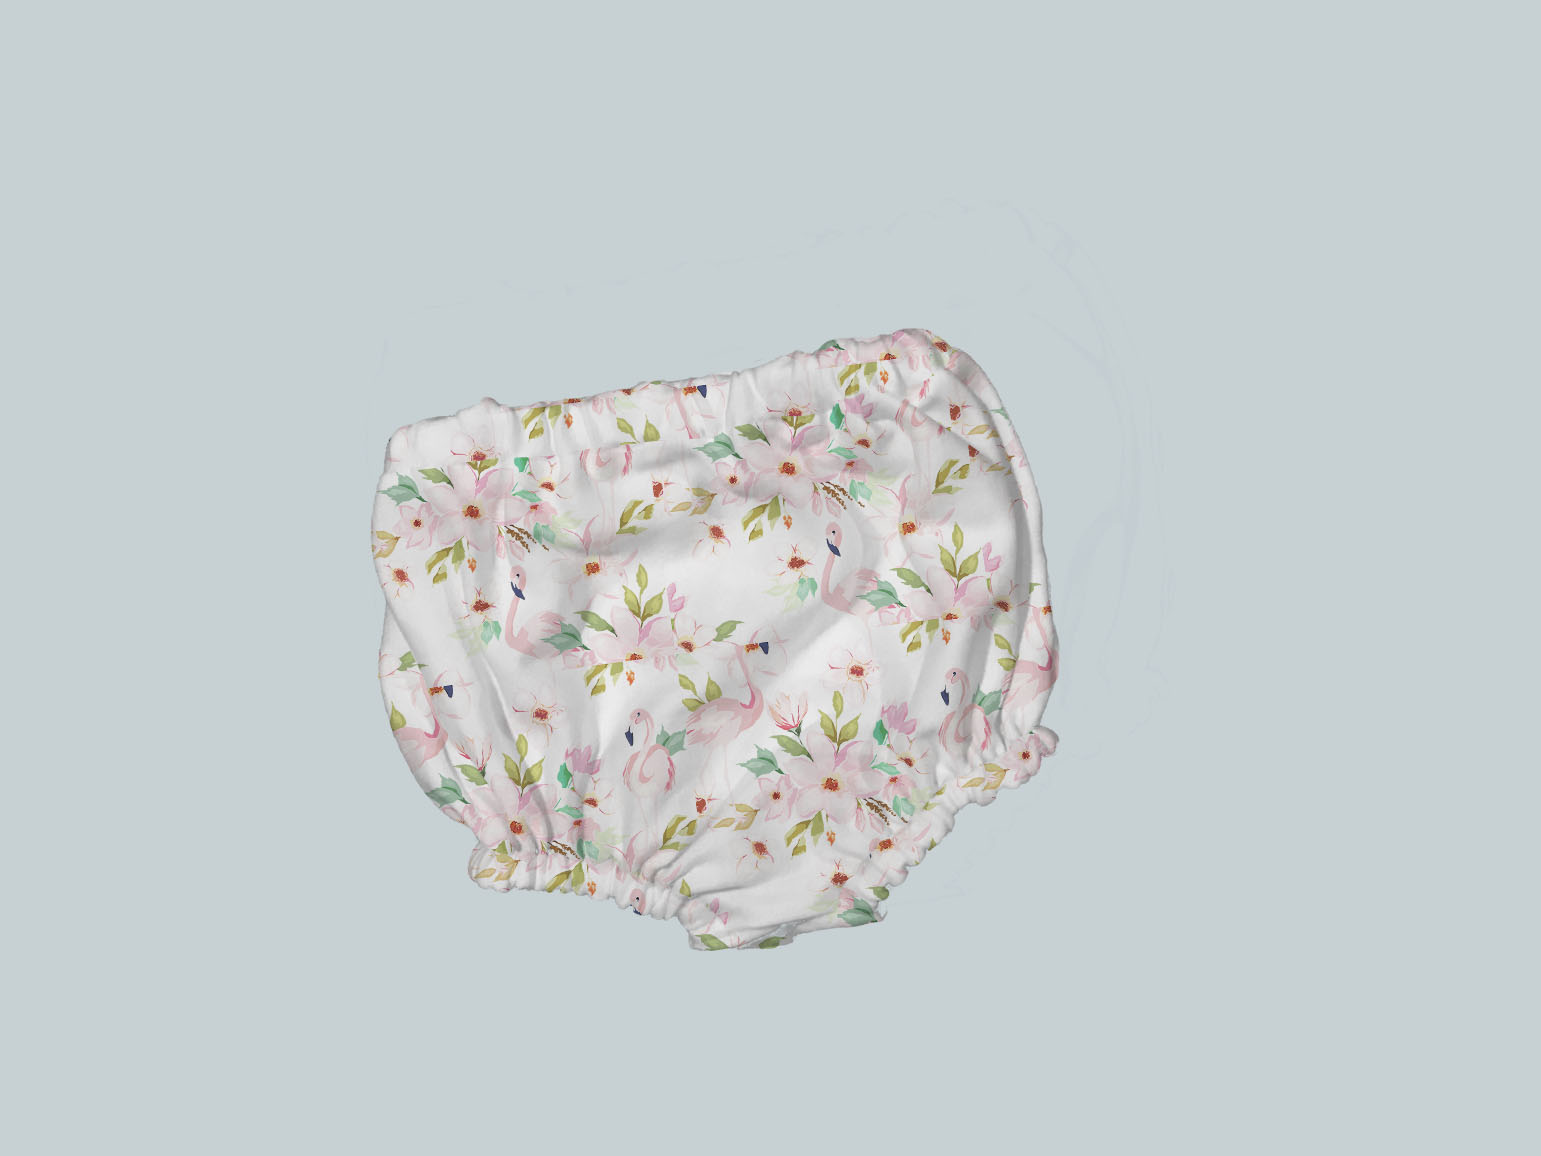 Bummies/Diaper Cover - Floral Flamingo